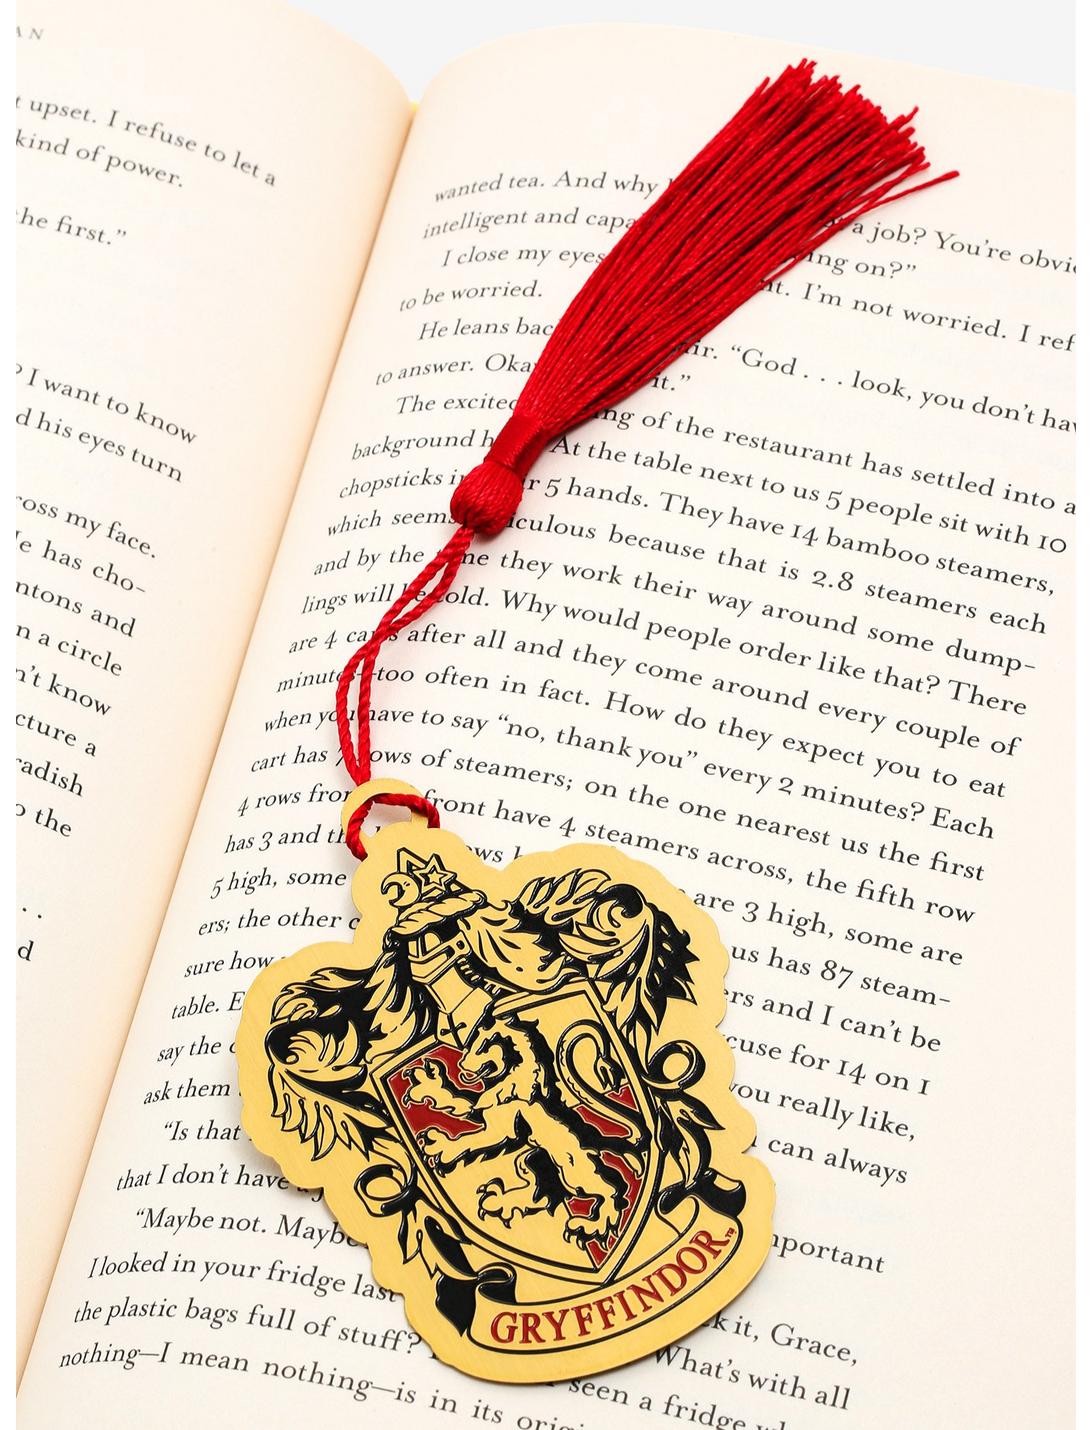 Harry Potter Gryffindor Tassel Metal Bookmark - BoxLunch Exclusive, , hi-res